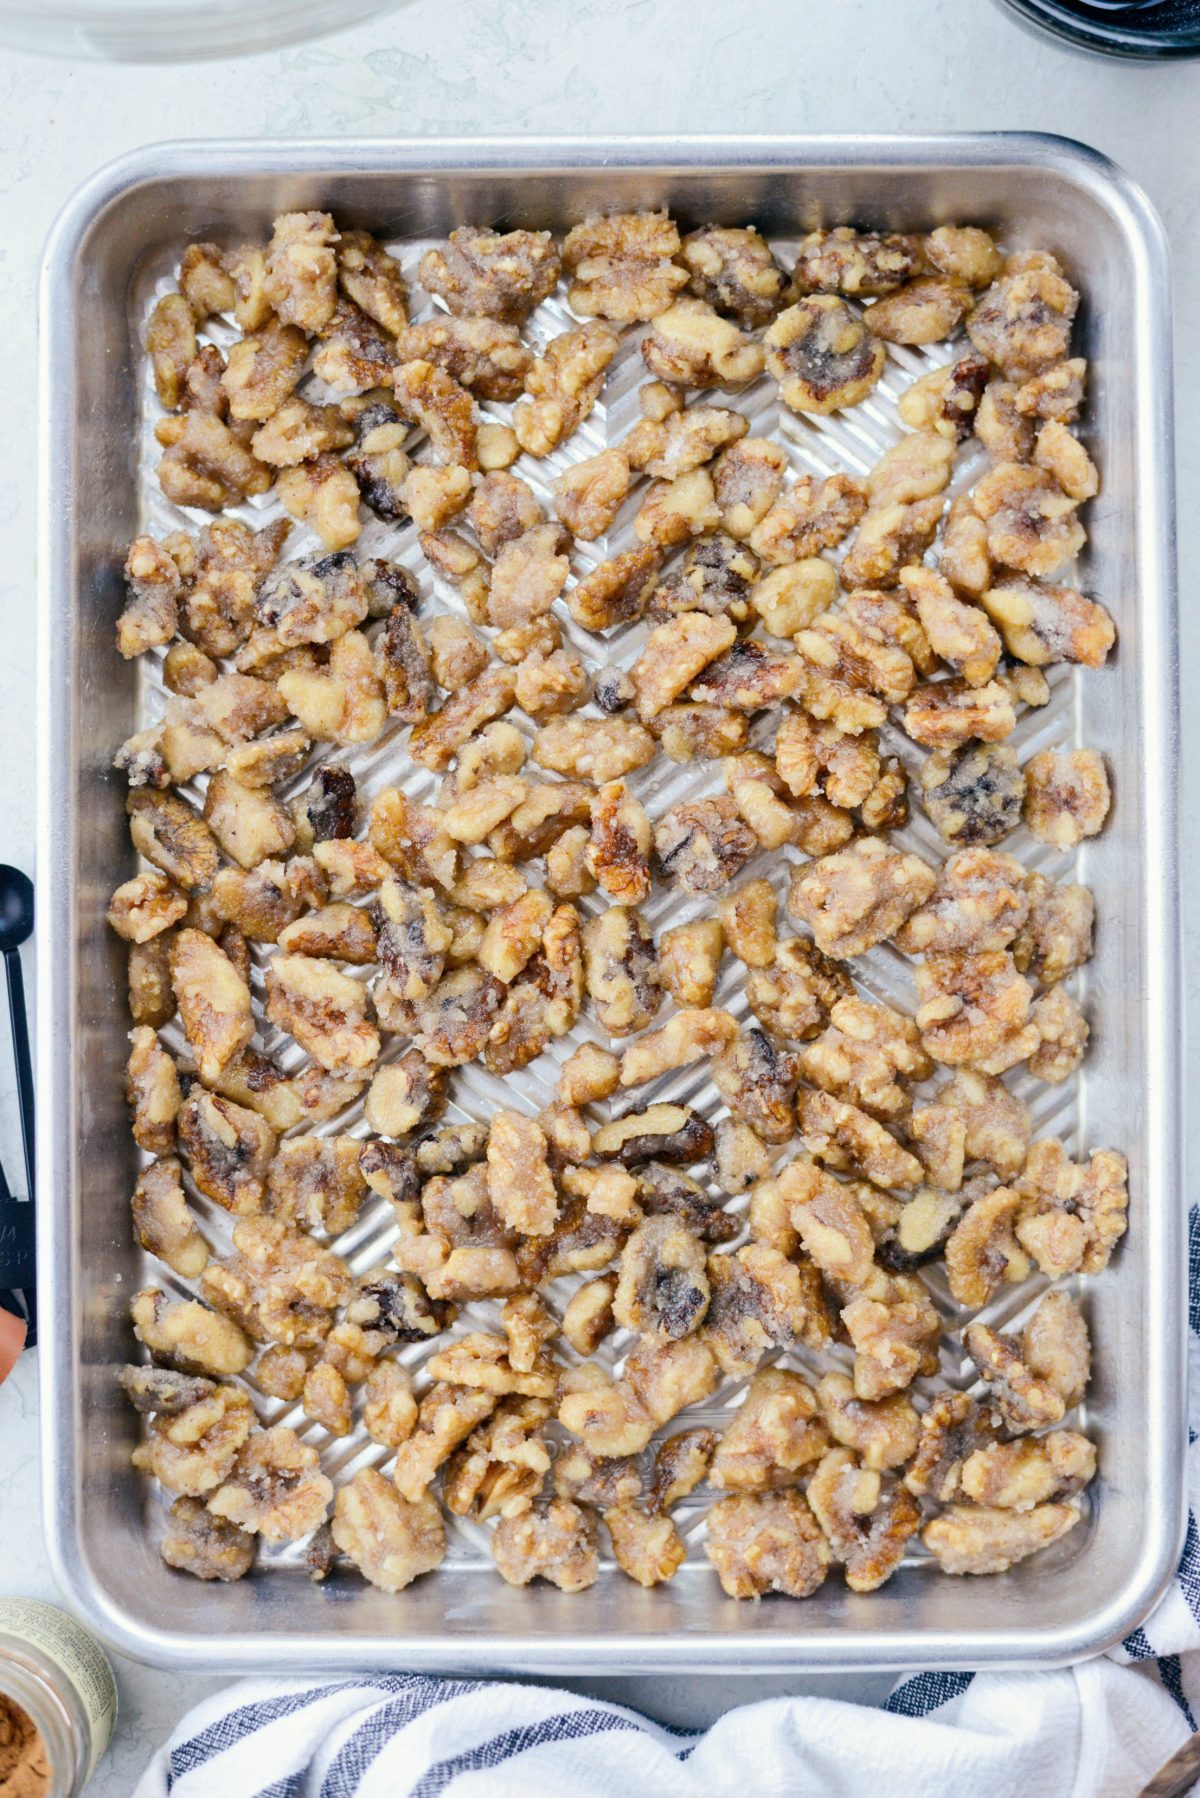 spread coated walnuts on rimmed baking sheet